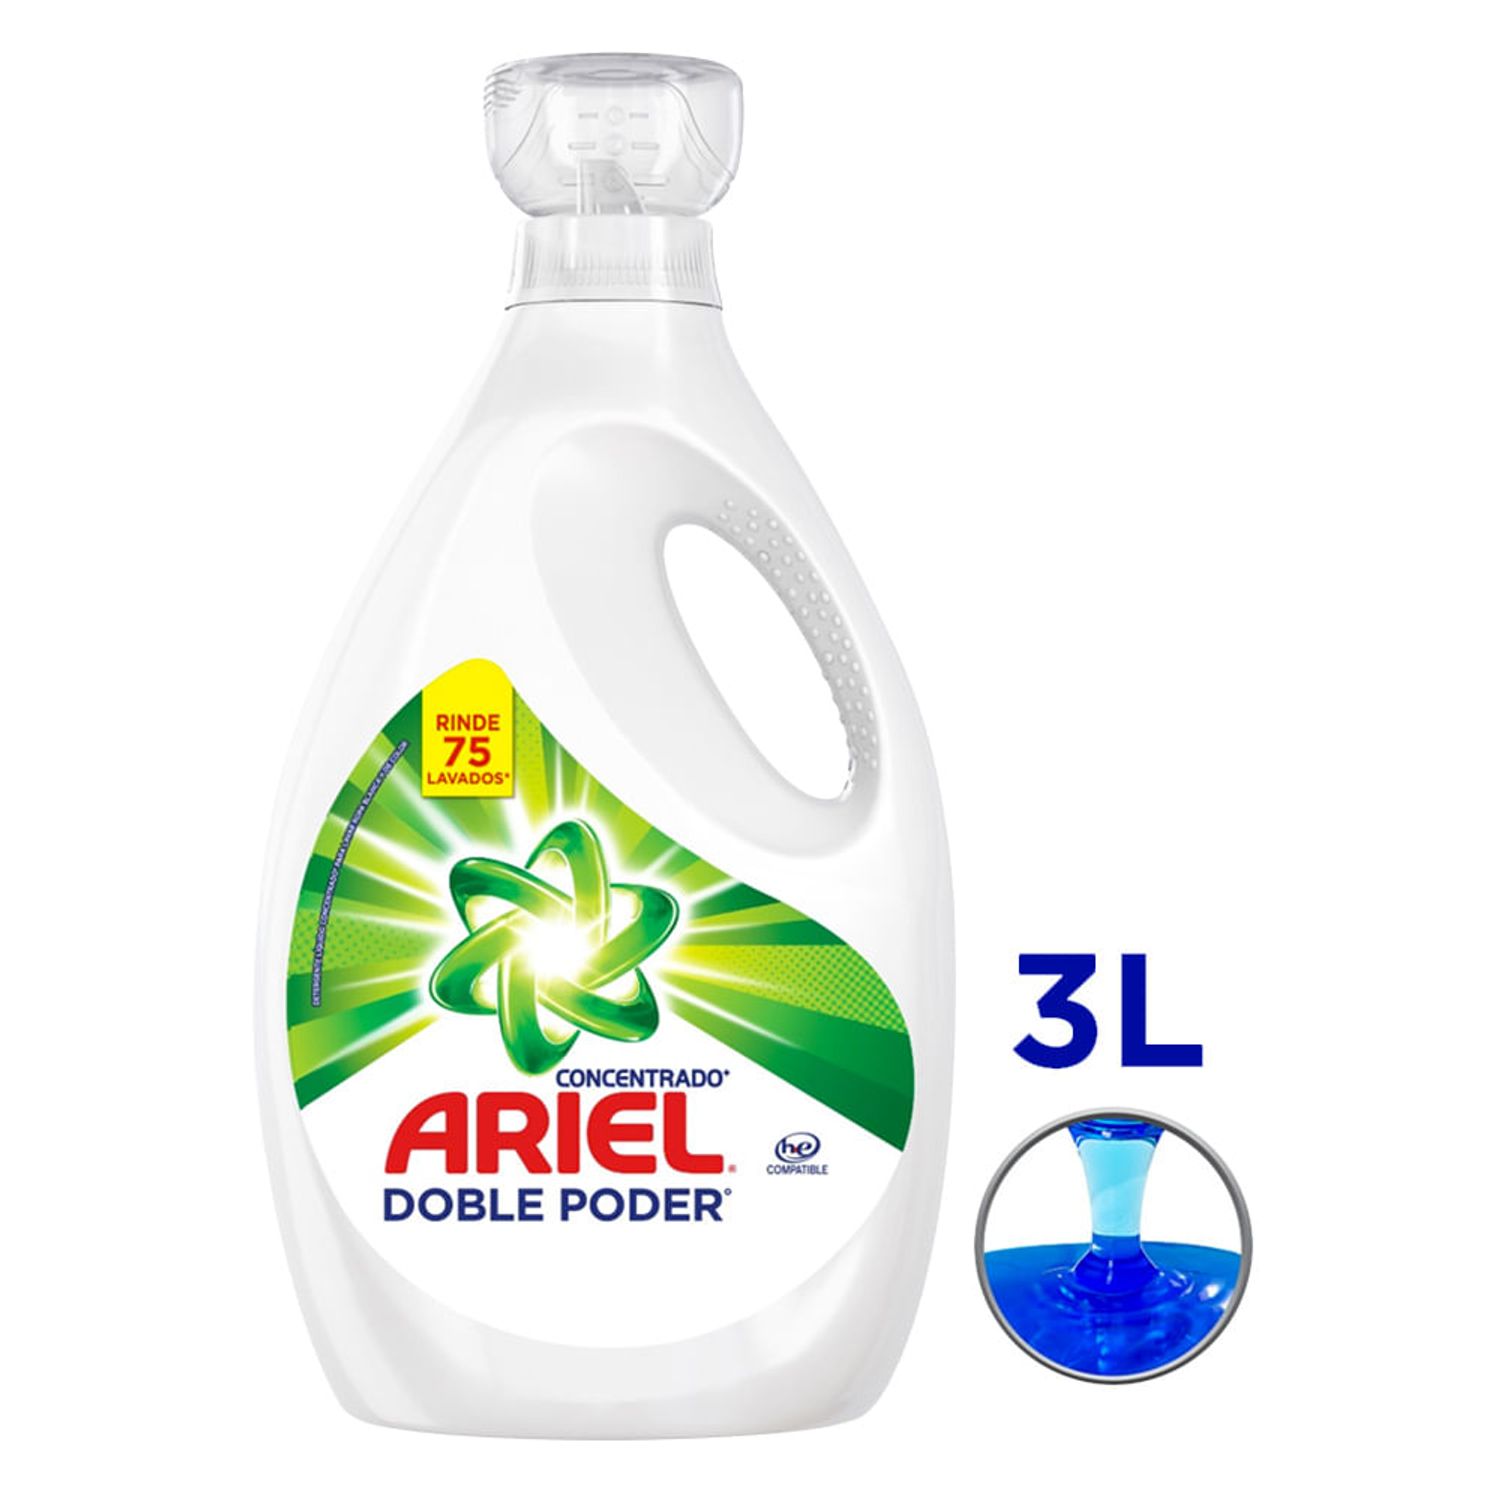 Detergente Líquido Concentrado 3.7 Litros Ariel Pack 2 Galoneras I Oechsle  - Oechsle